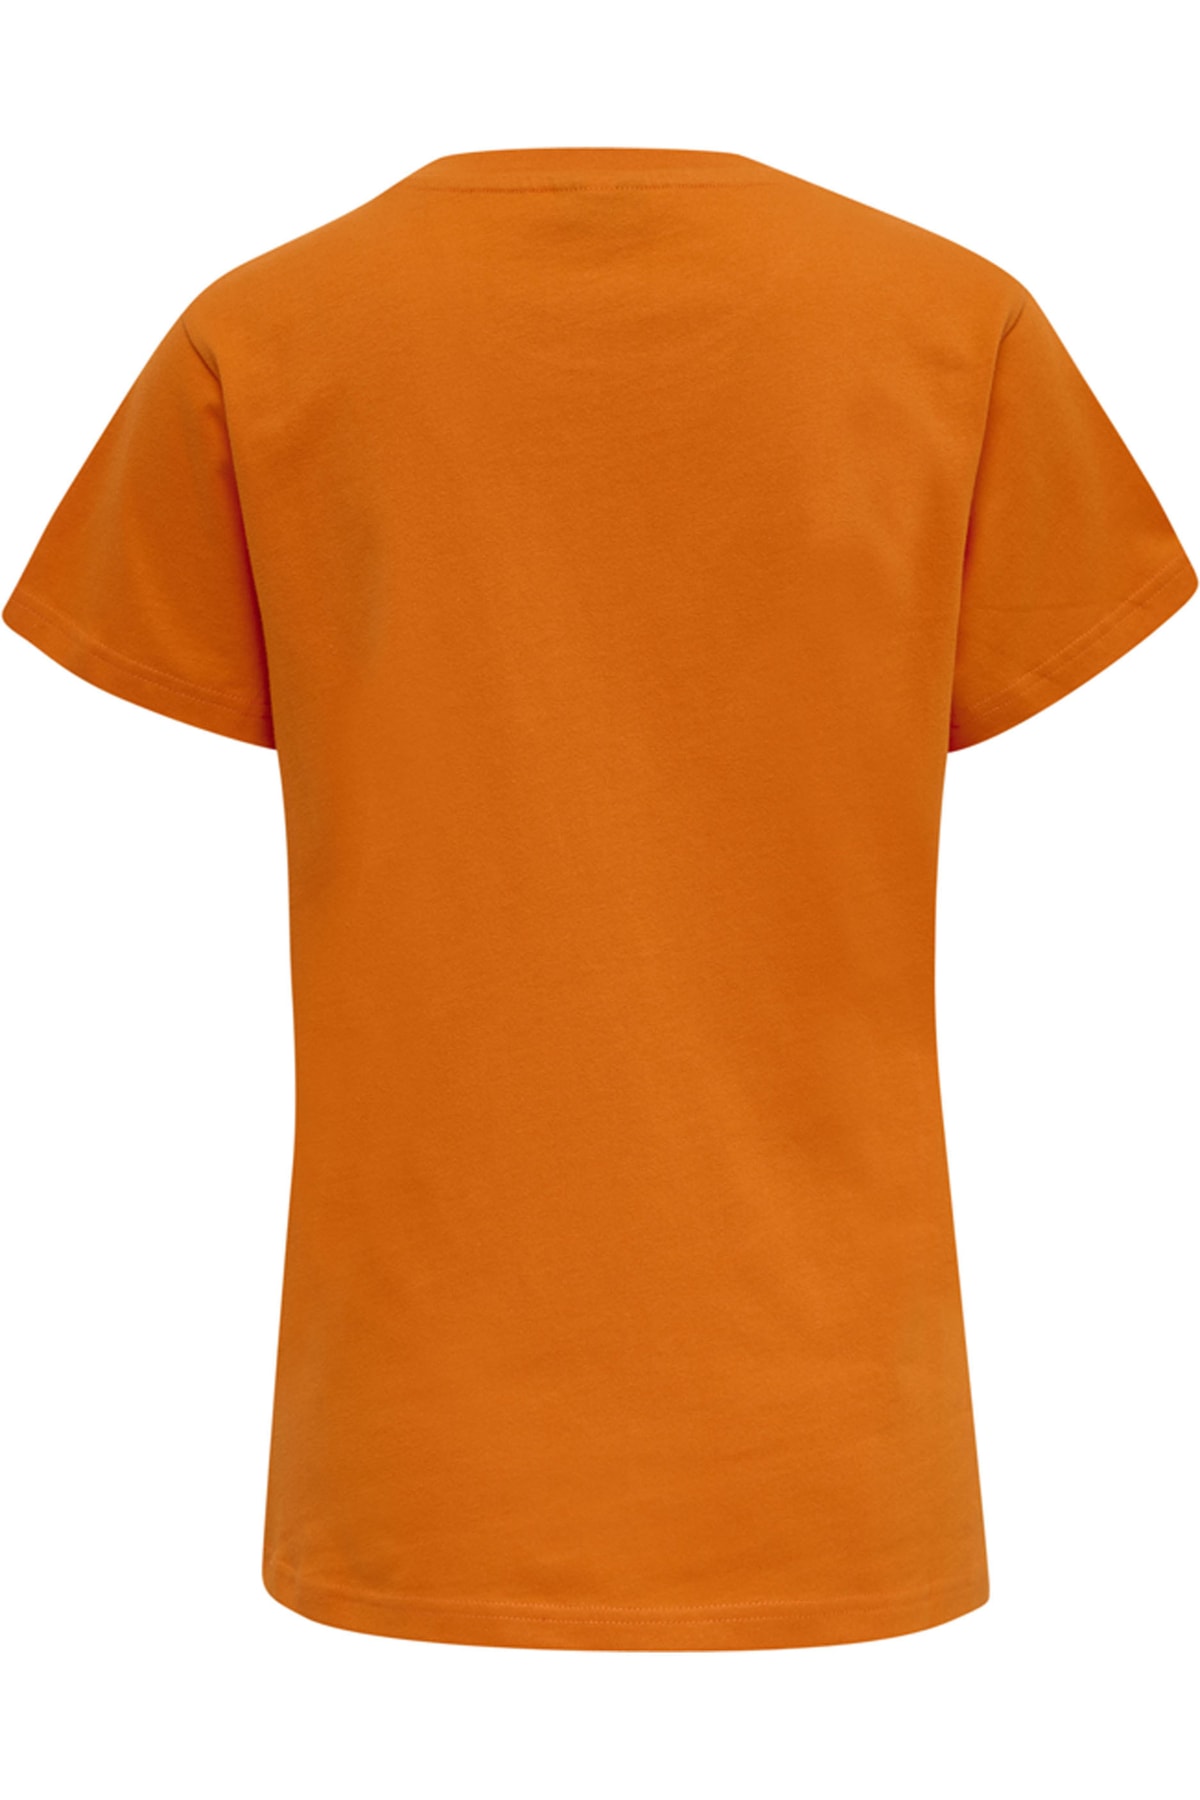 HUMMEL T-Shirt Orange Regular Fit FN6370